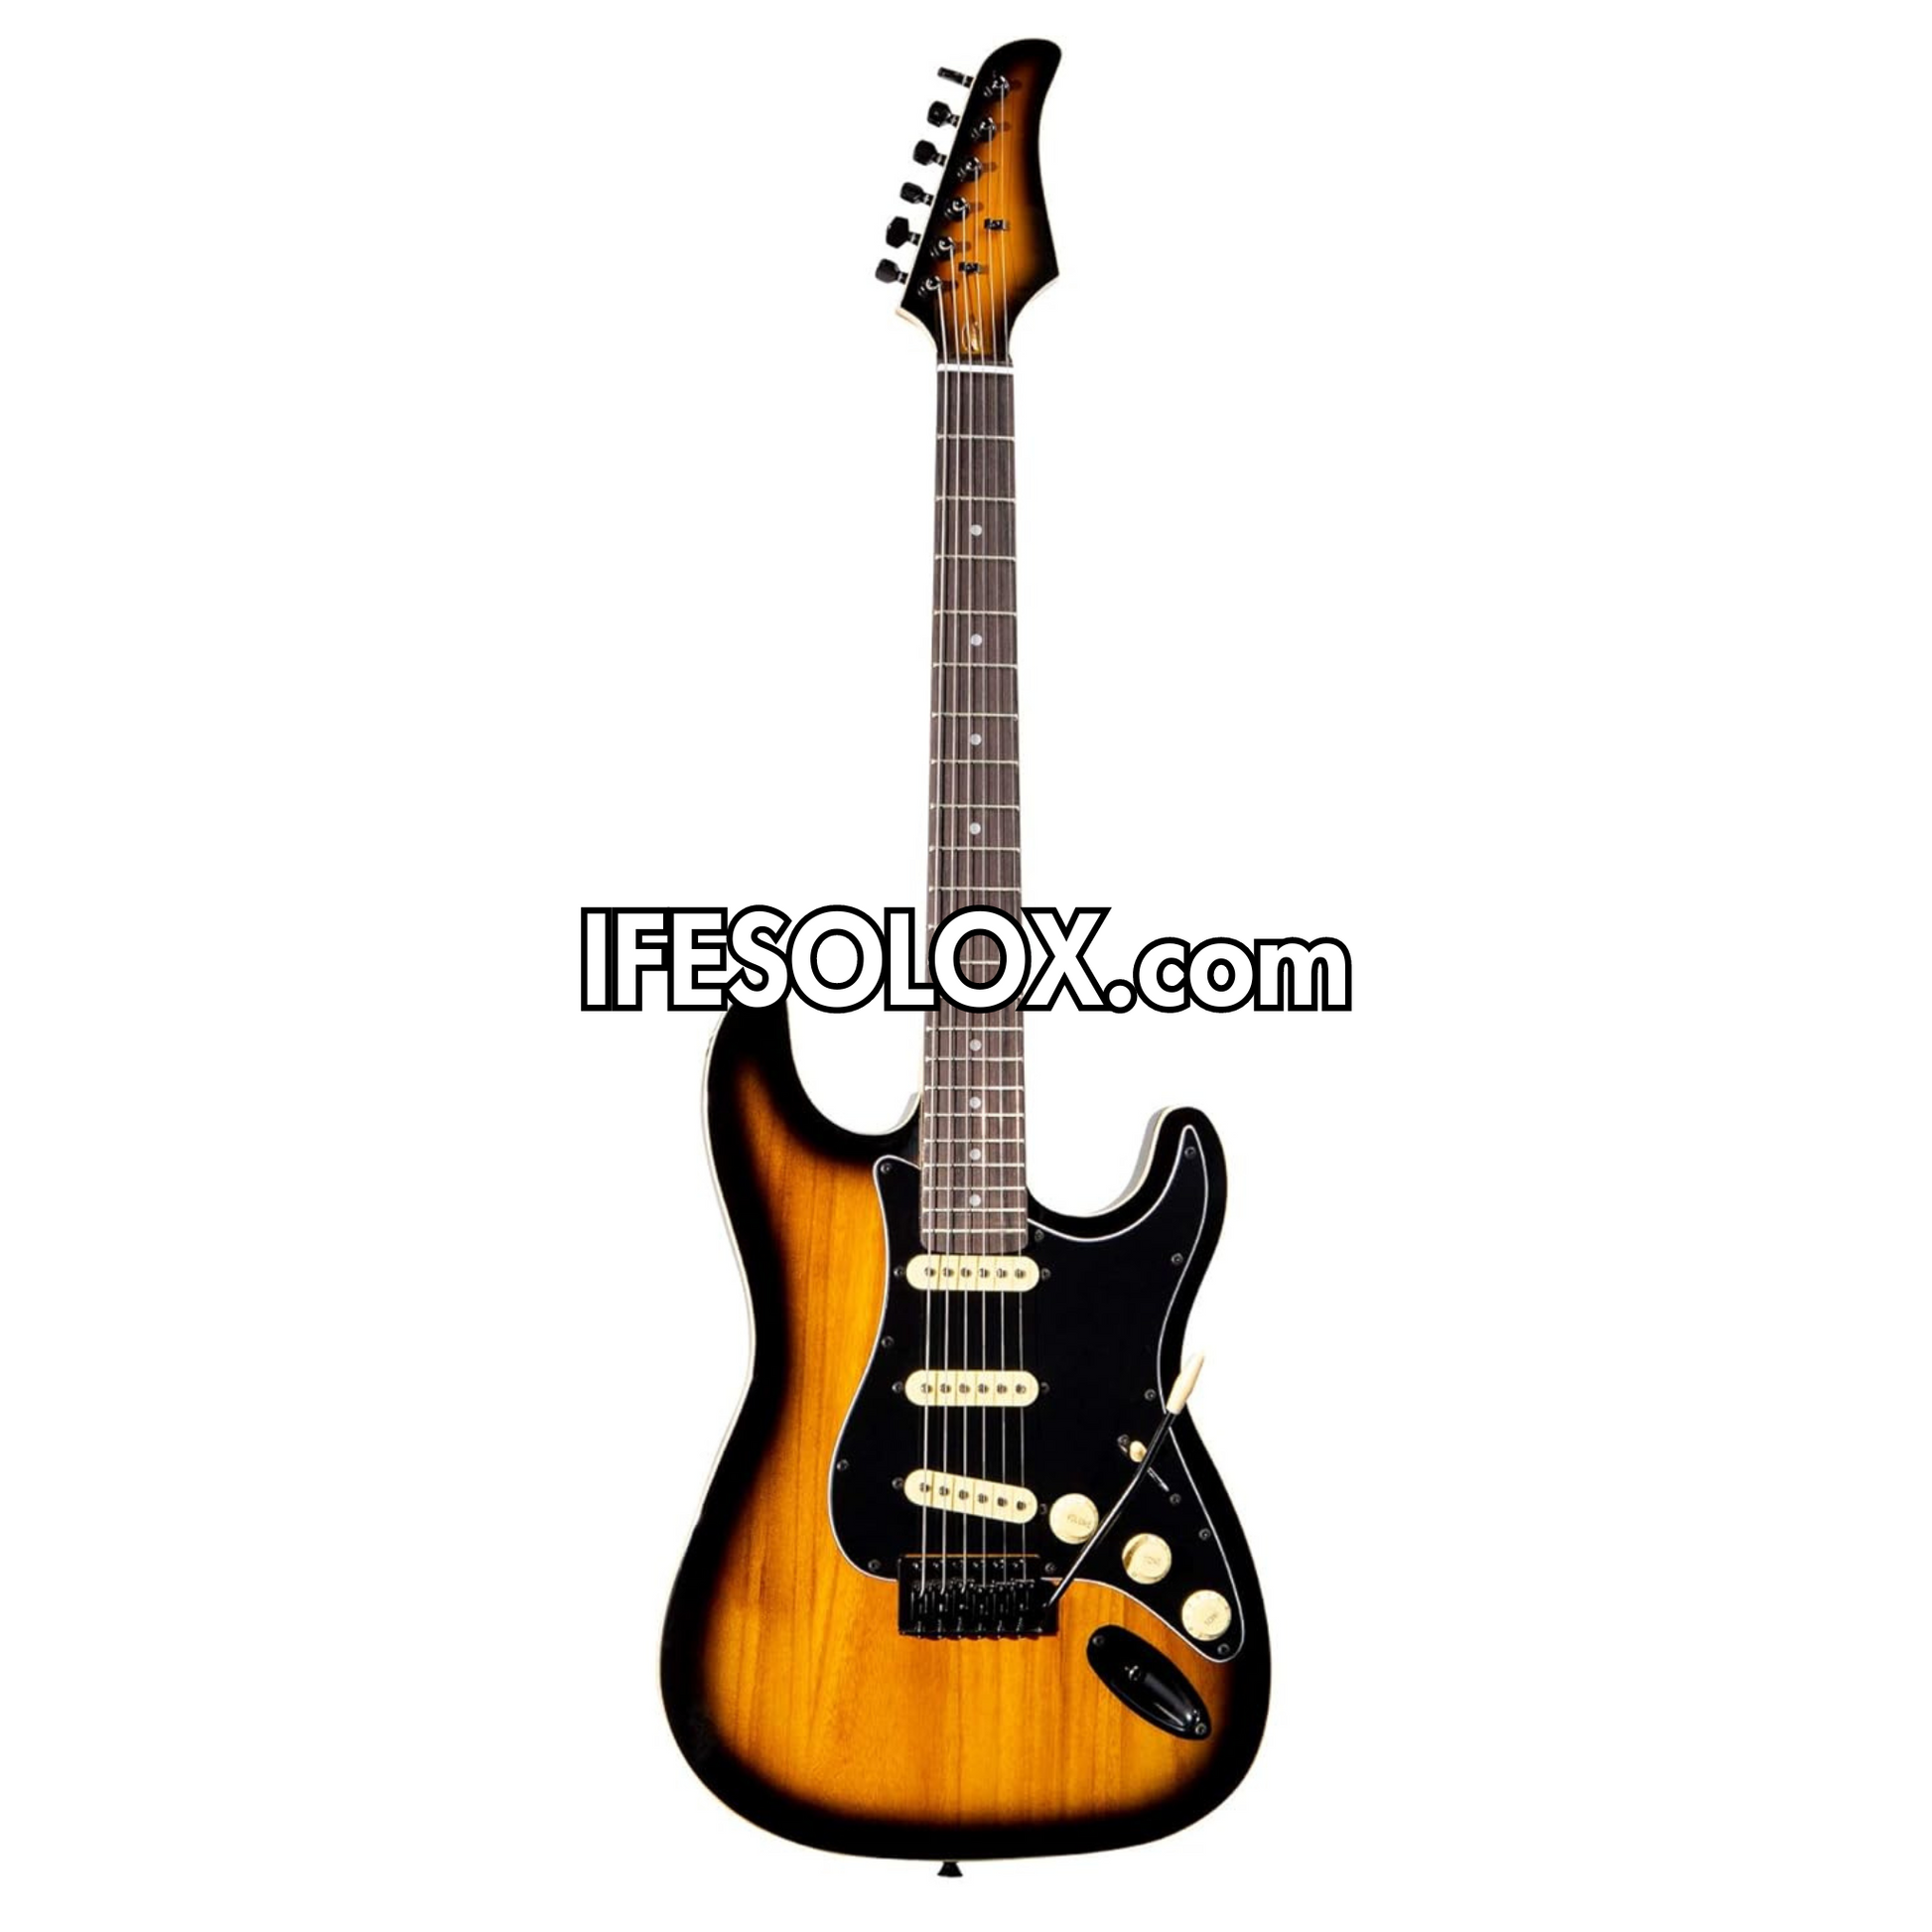 Classic 39" Sunburst 6-String 22-Flet Electric Lead Guitar with 3 Control Knob - Brand New